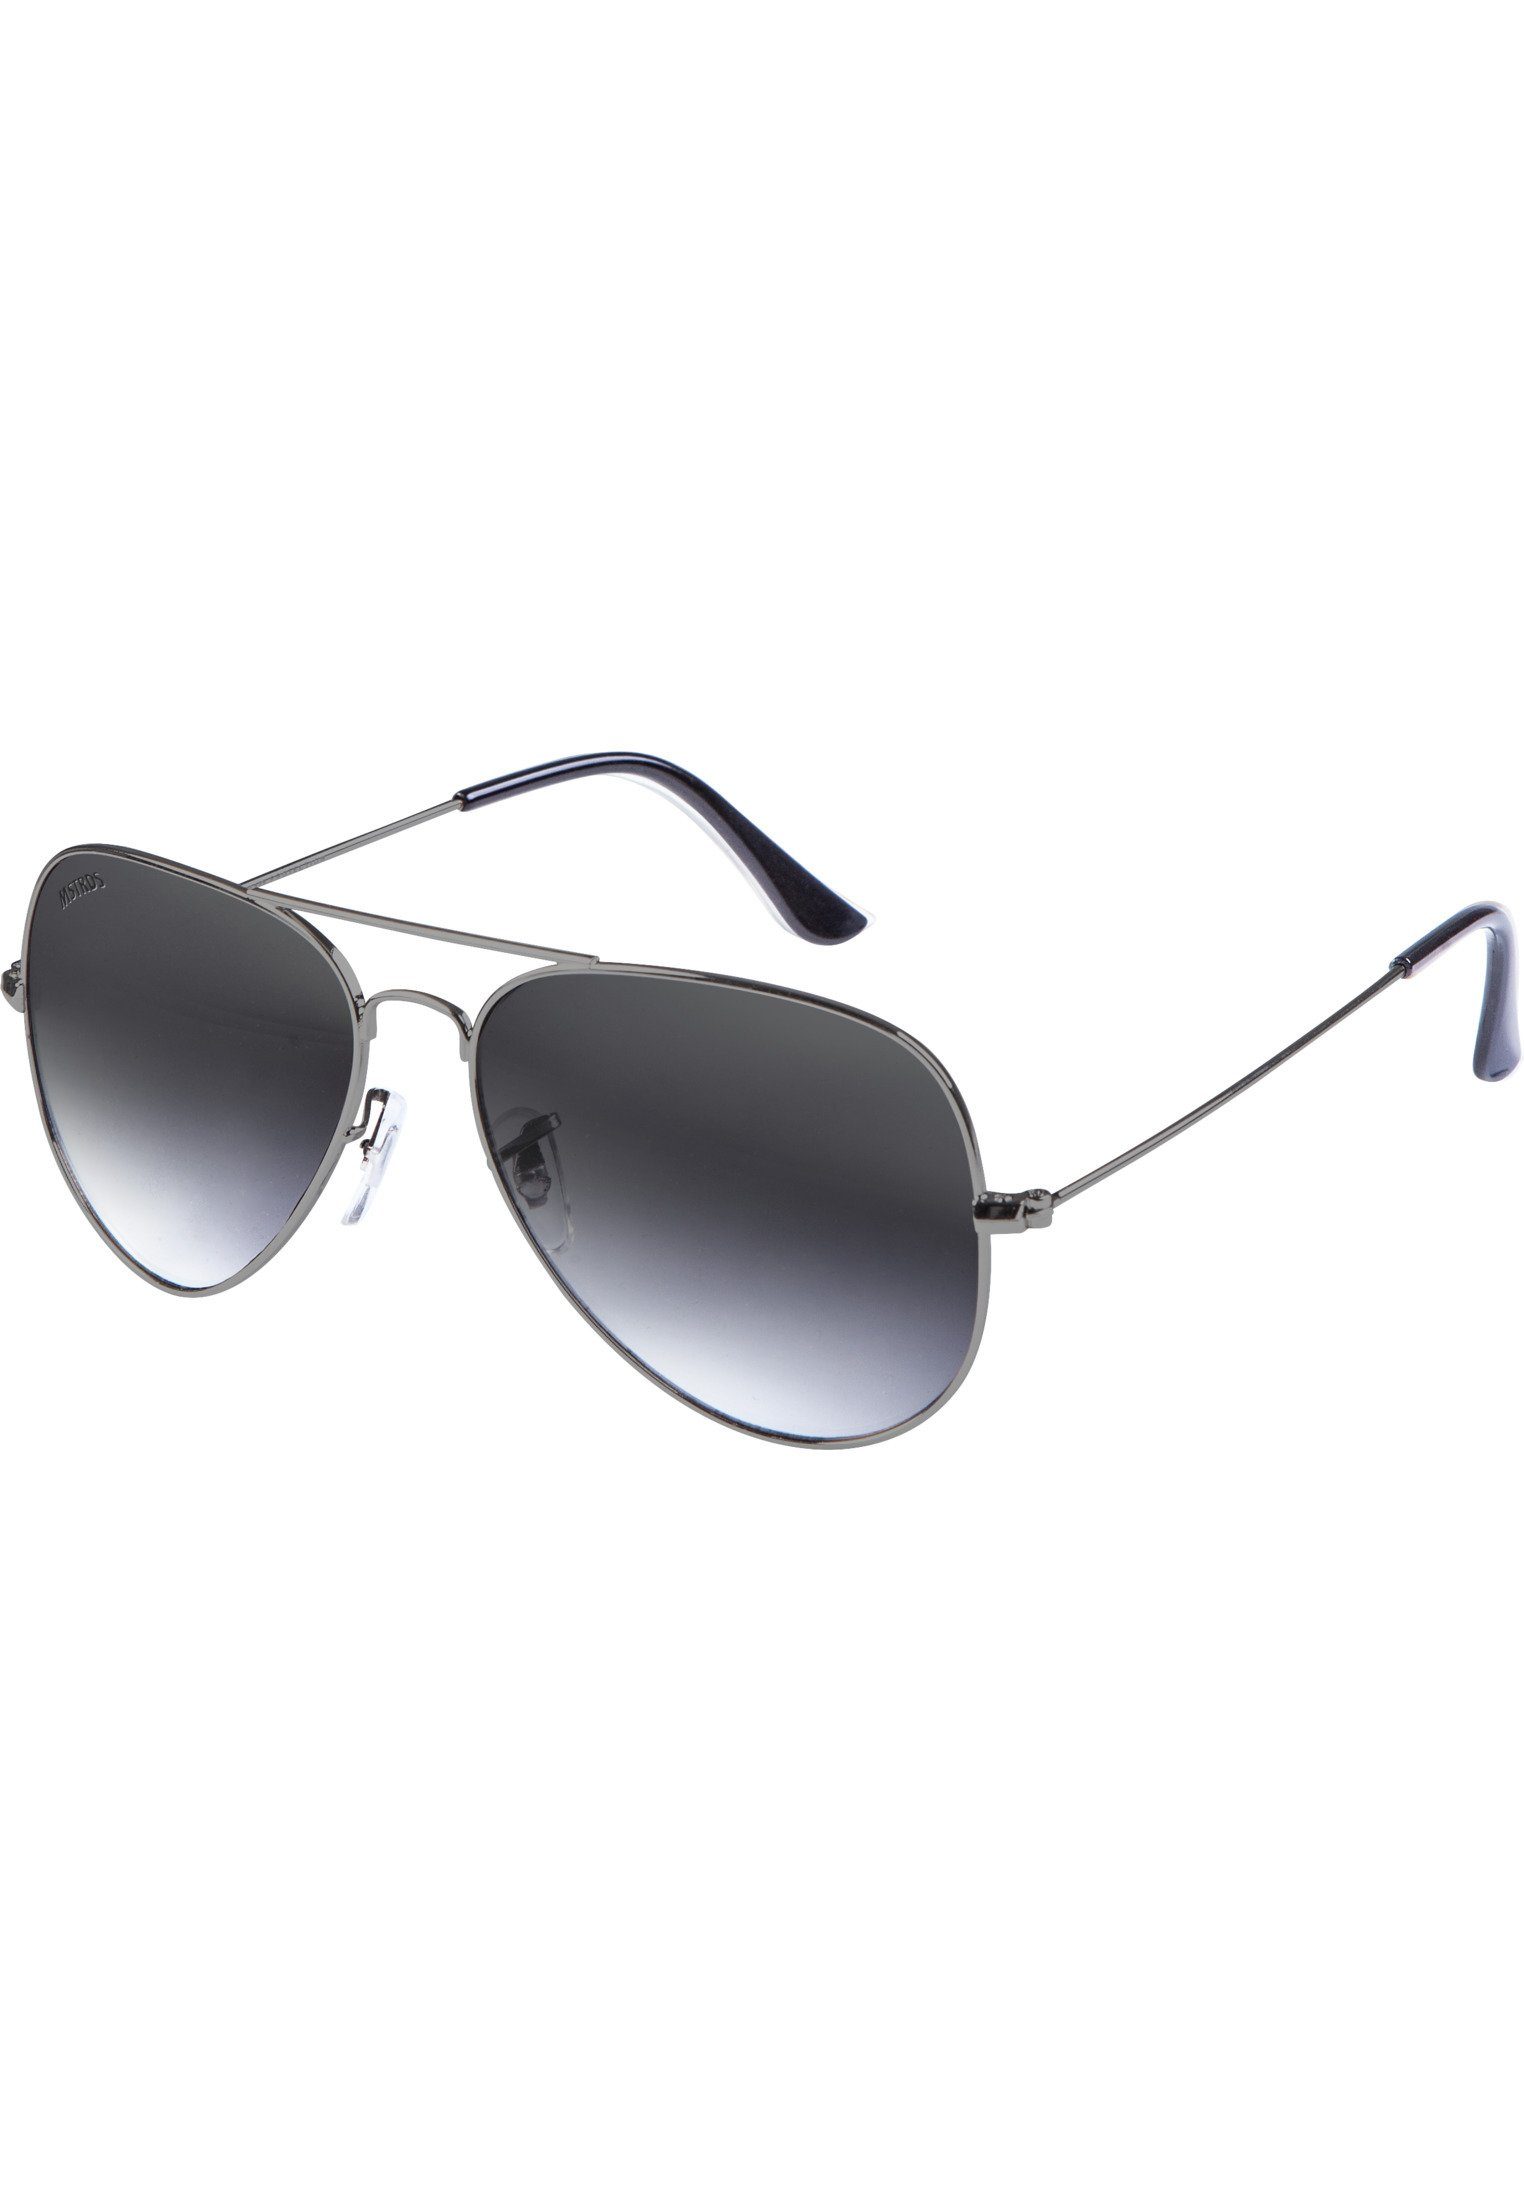 Sonnenbrille PureAv gun/grey MSTRDS Accessoires Sunglasses